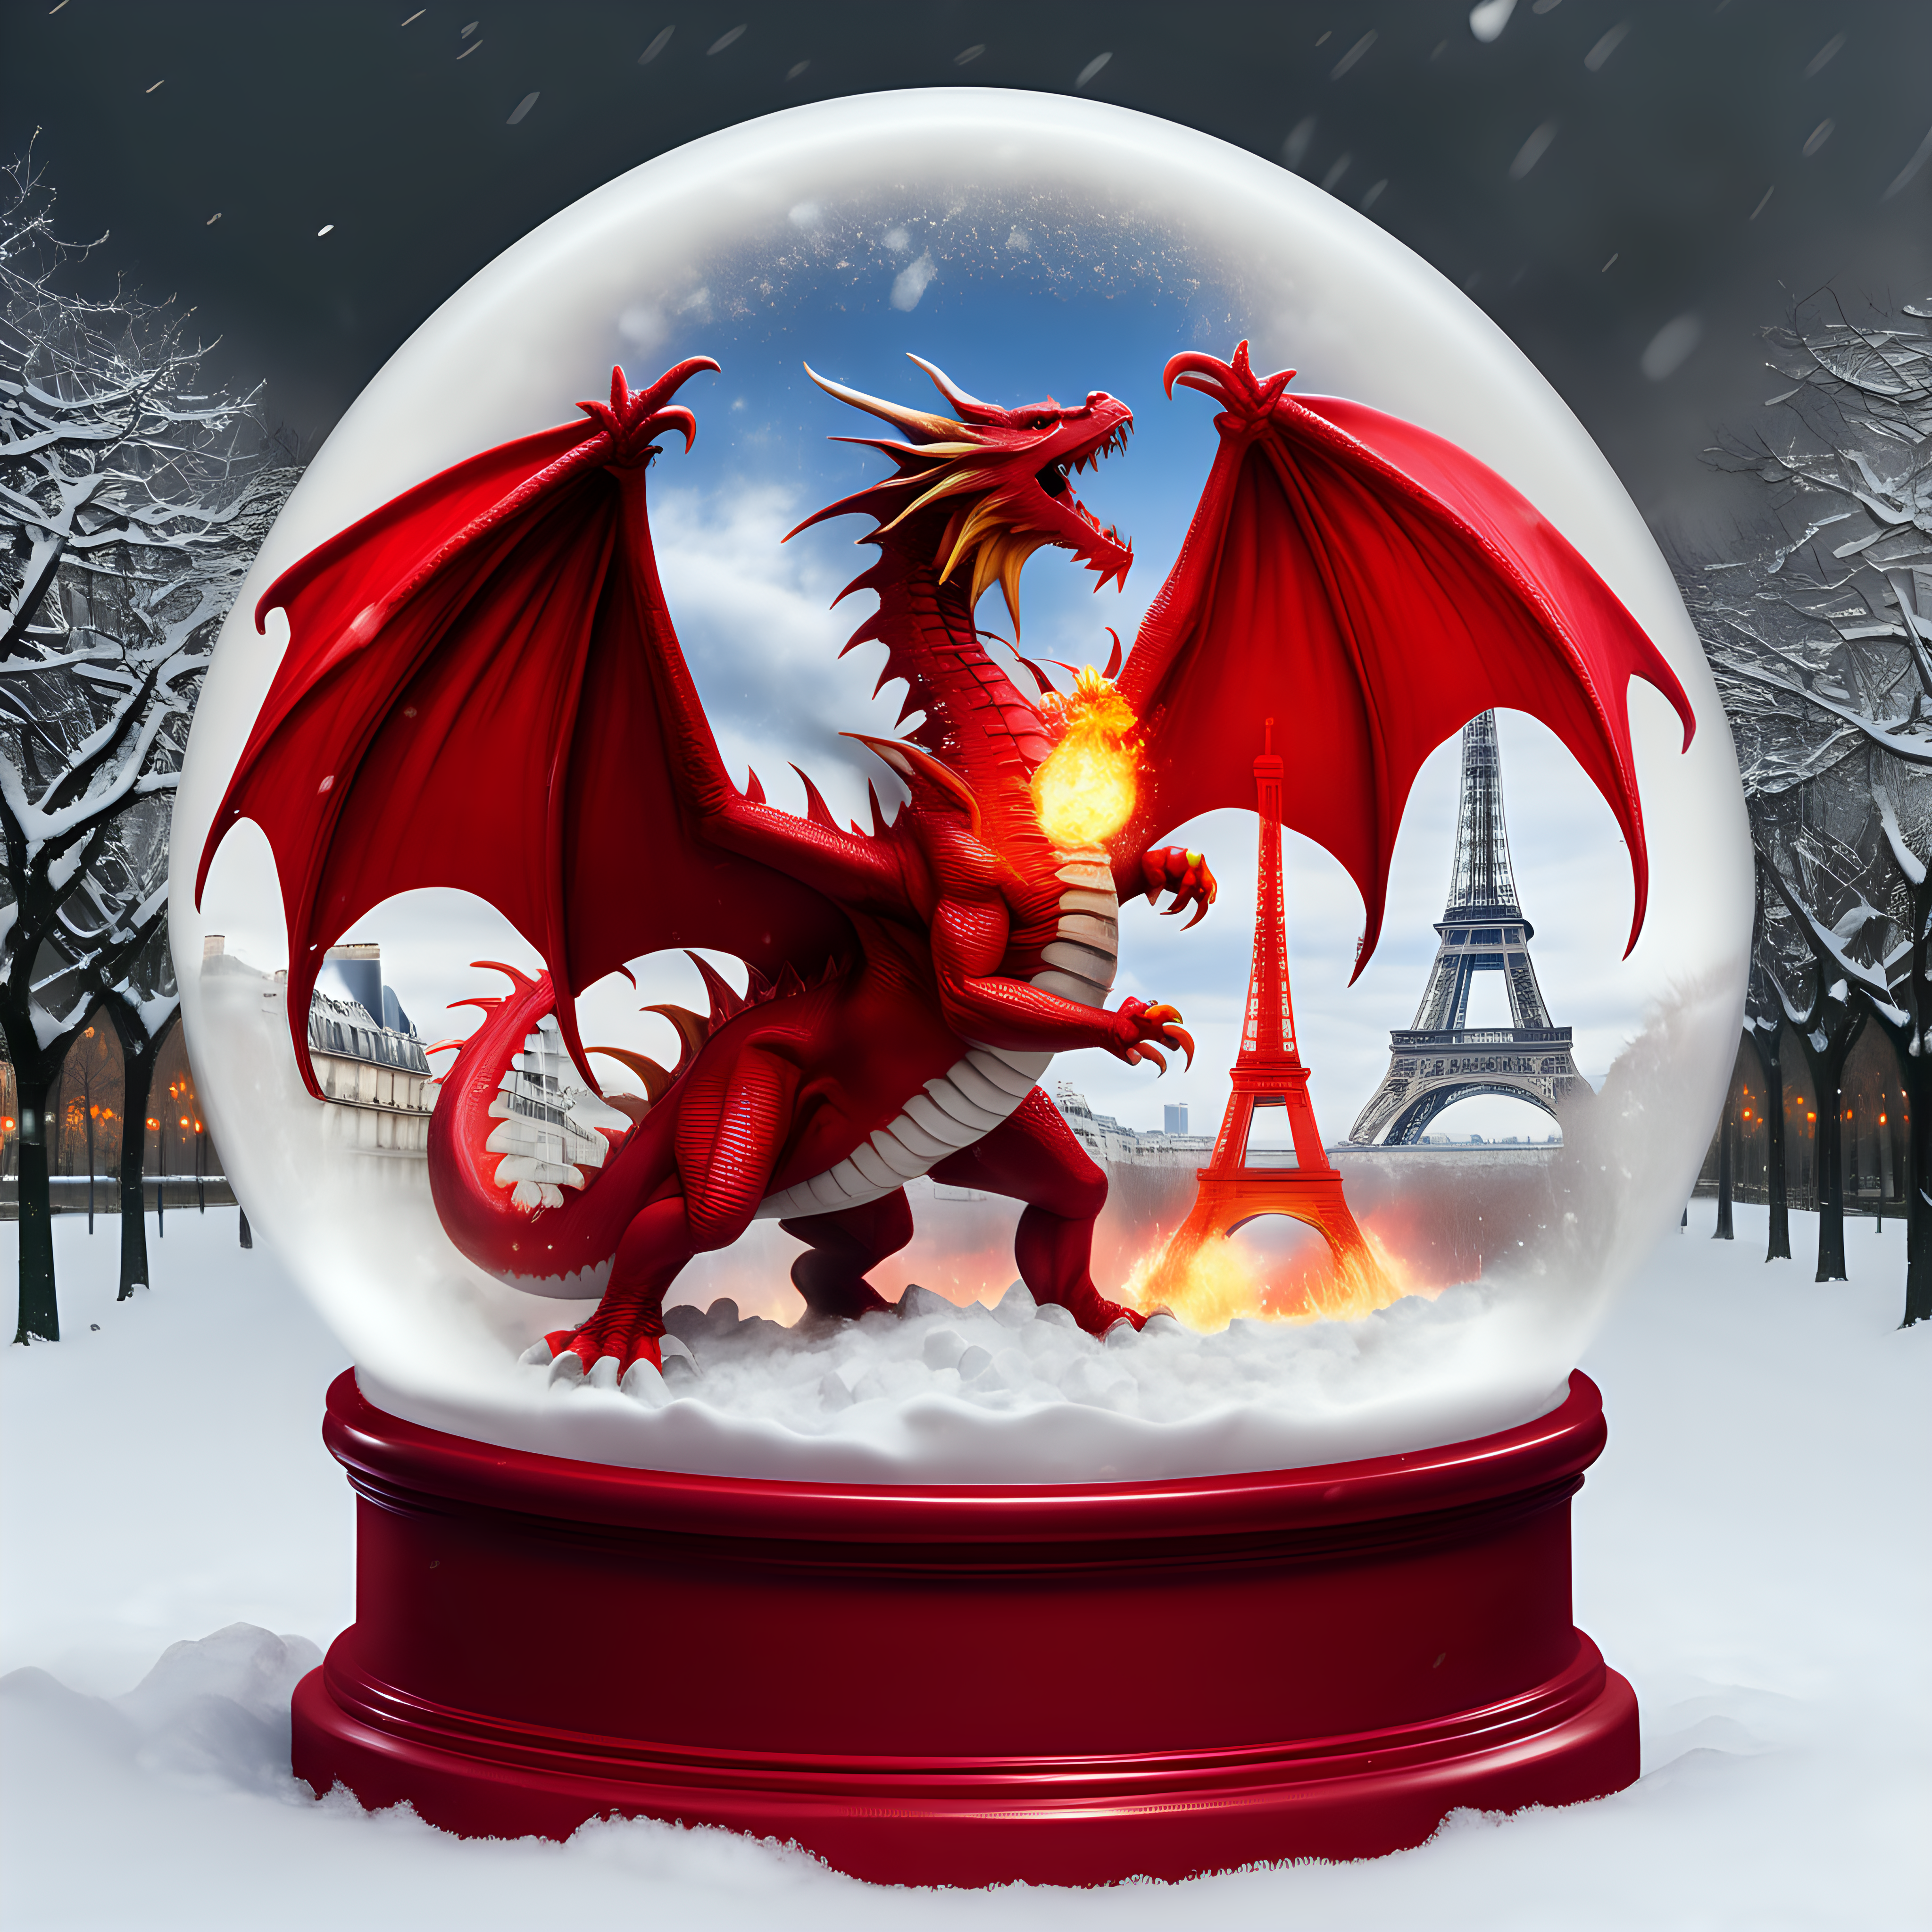 red 2 headed fire breathing dragon destroying Paris